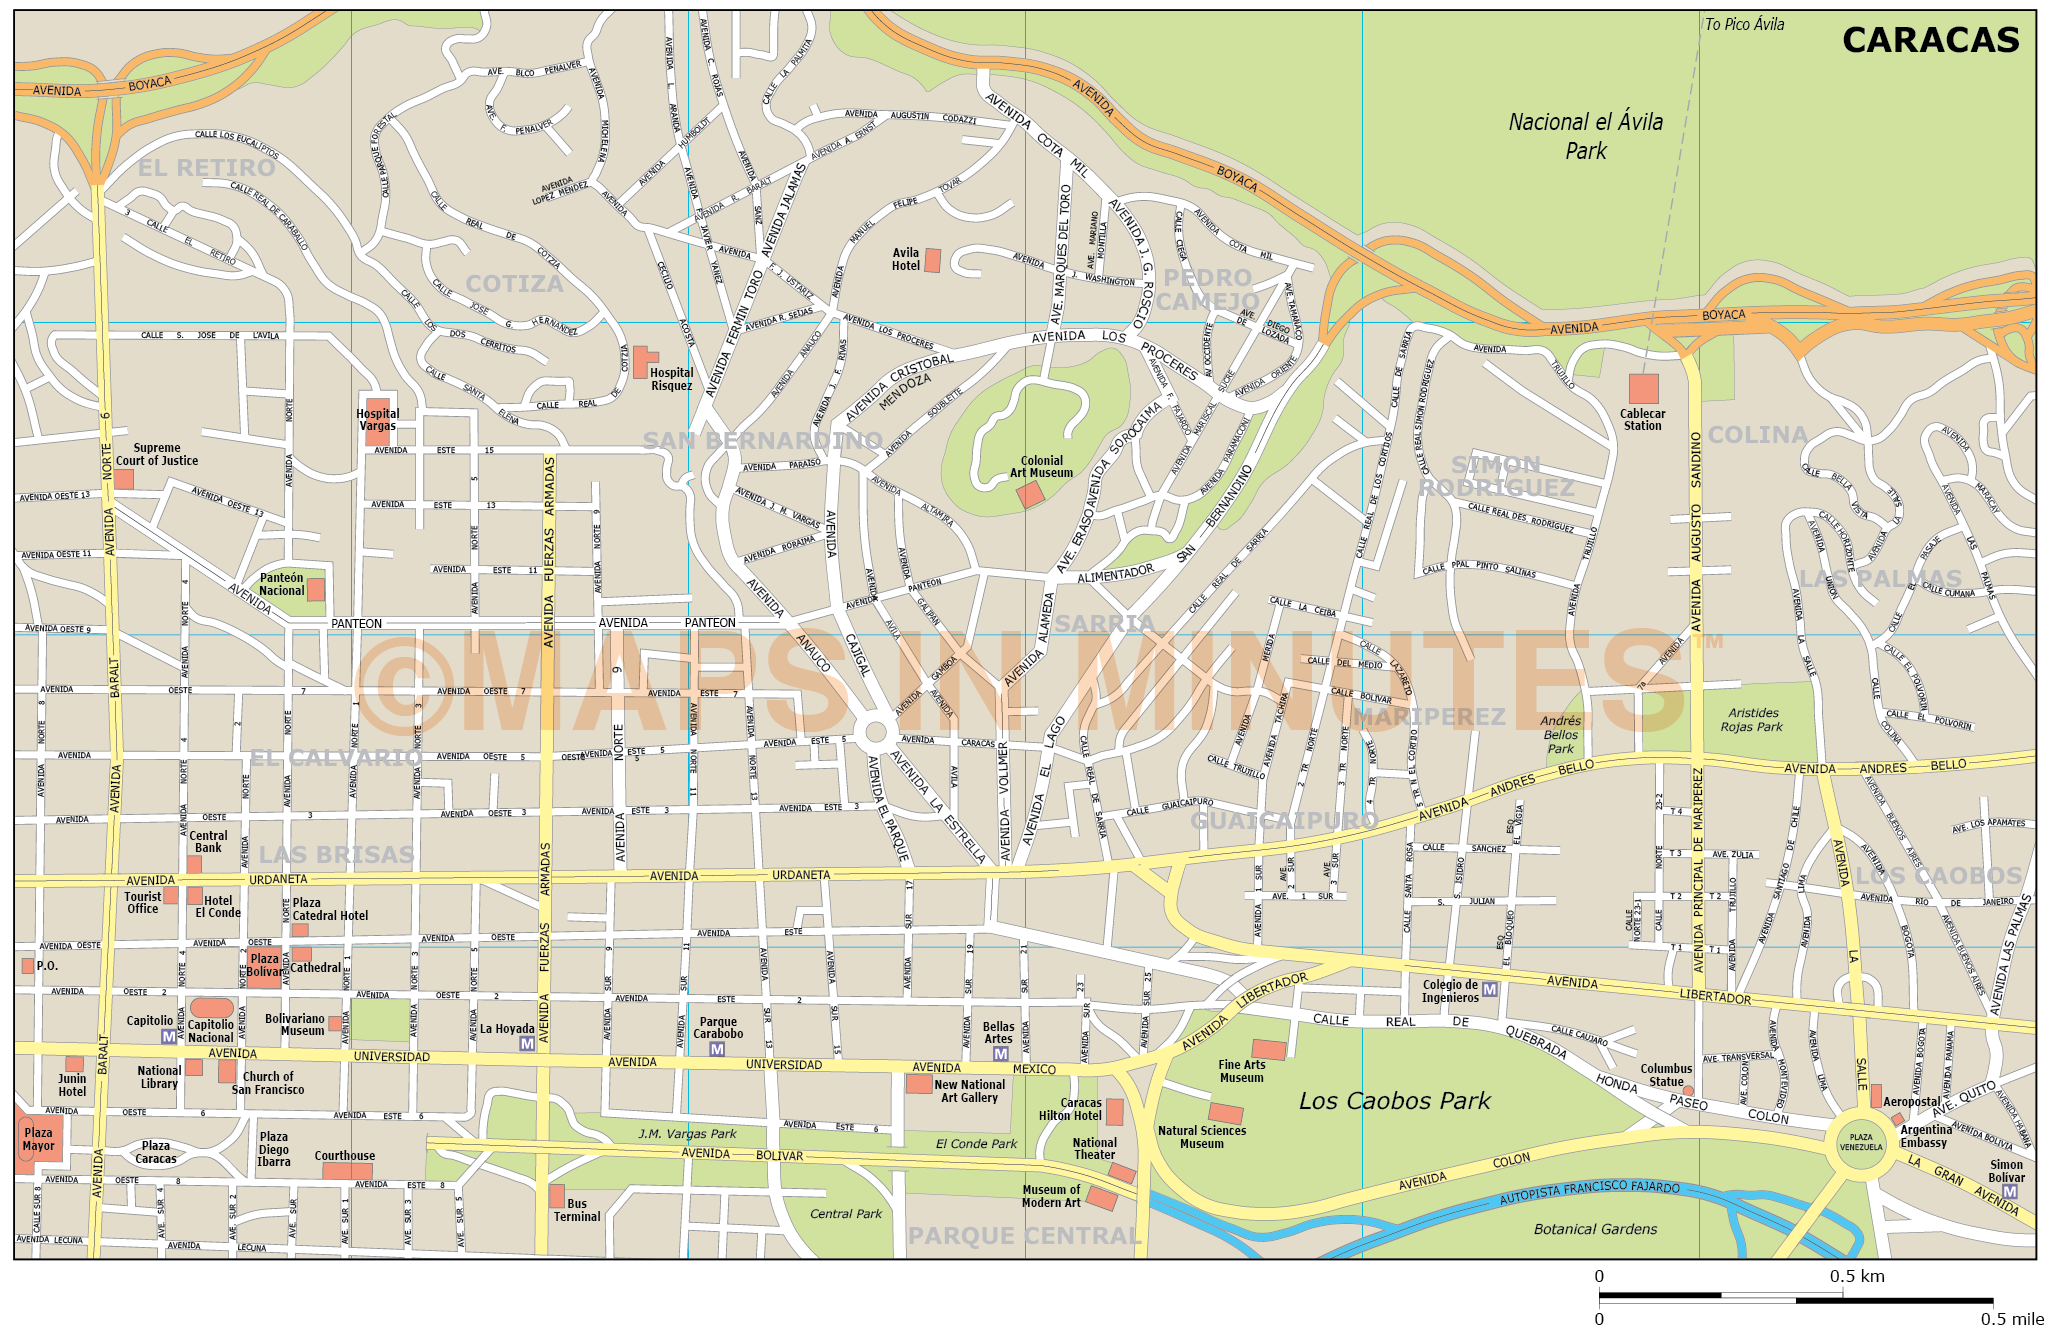 Caracas City Map In Illustrator Cs Or Pdf Format Digital Vector Map